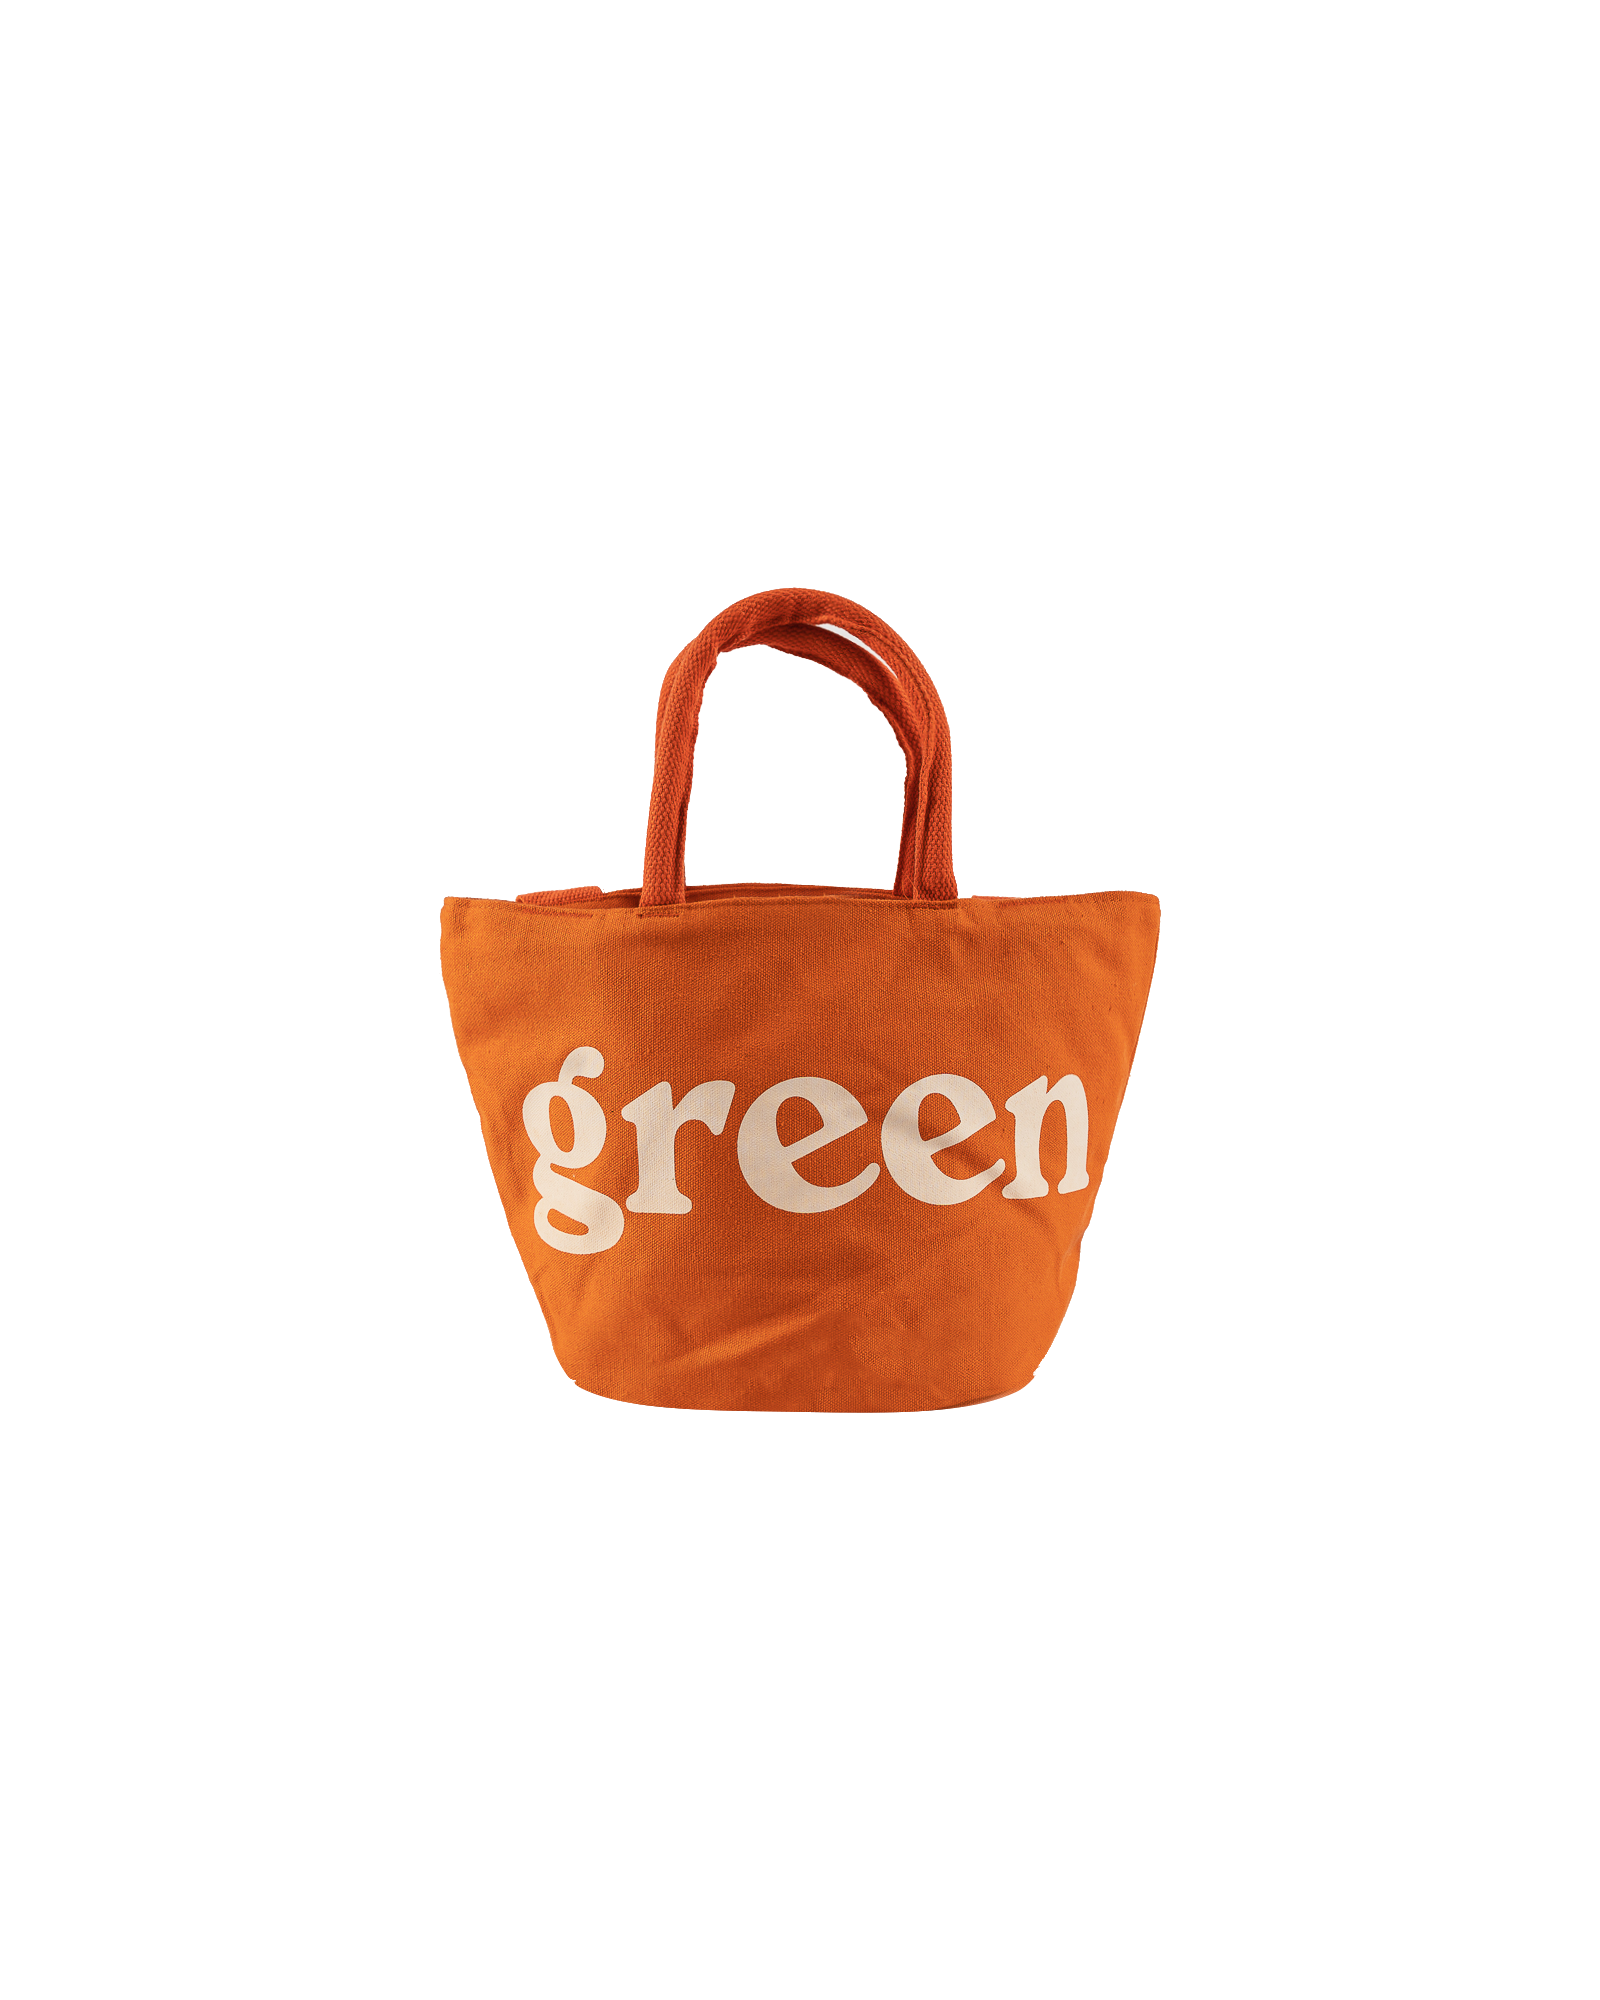 Mister Green - Accessory - Small Grow Bag/Tote - V2 - Orange